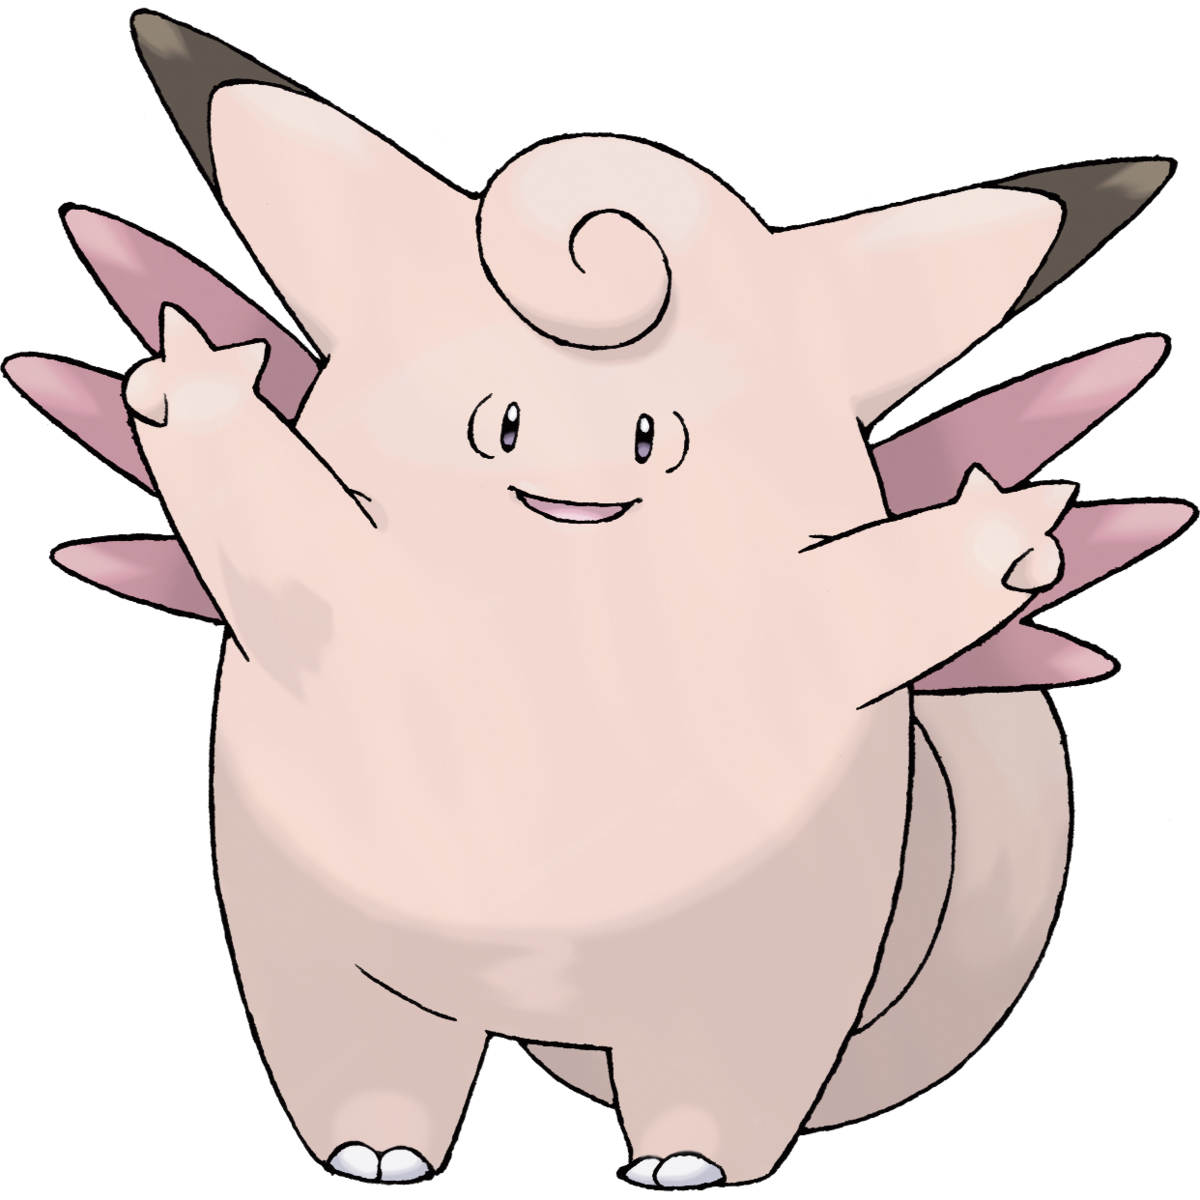 Mimikyu (Pokémon) - Bulbapedia, the community-driven Pokémon encyclopedia